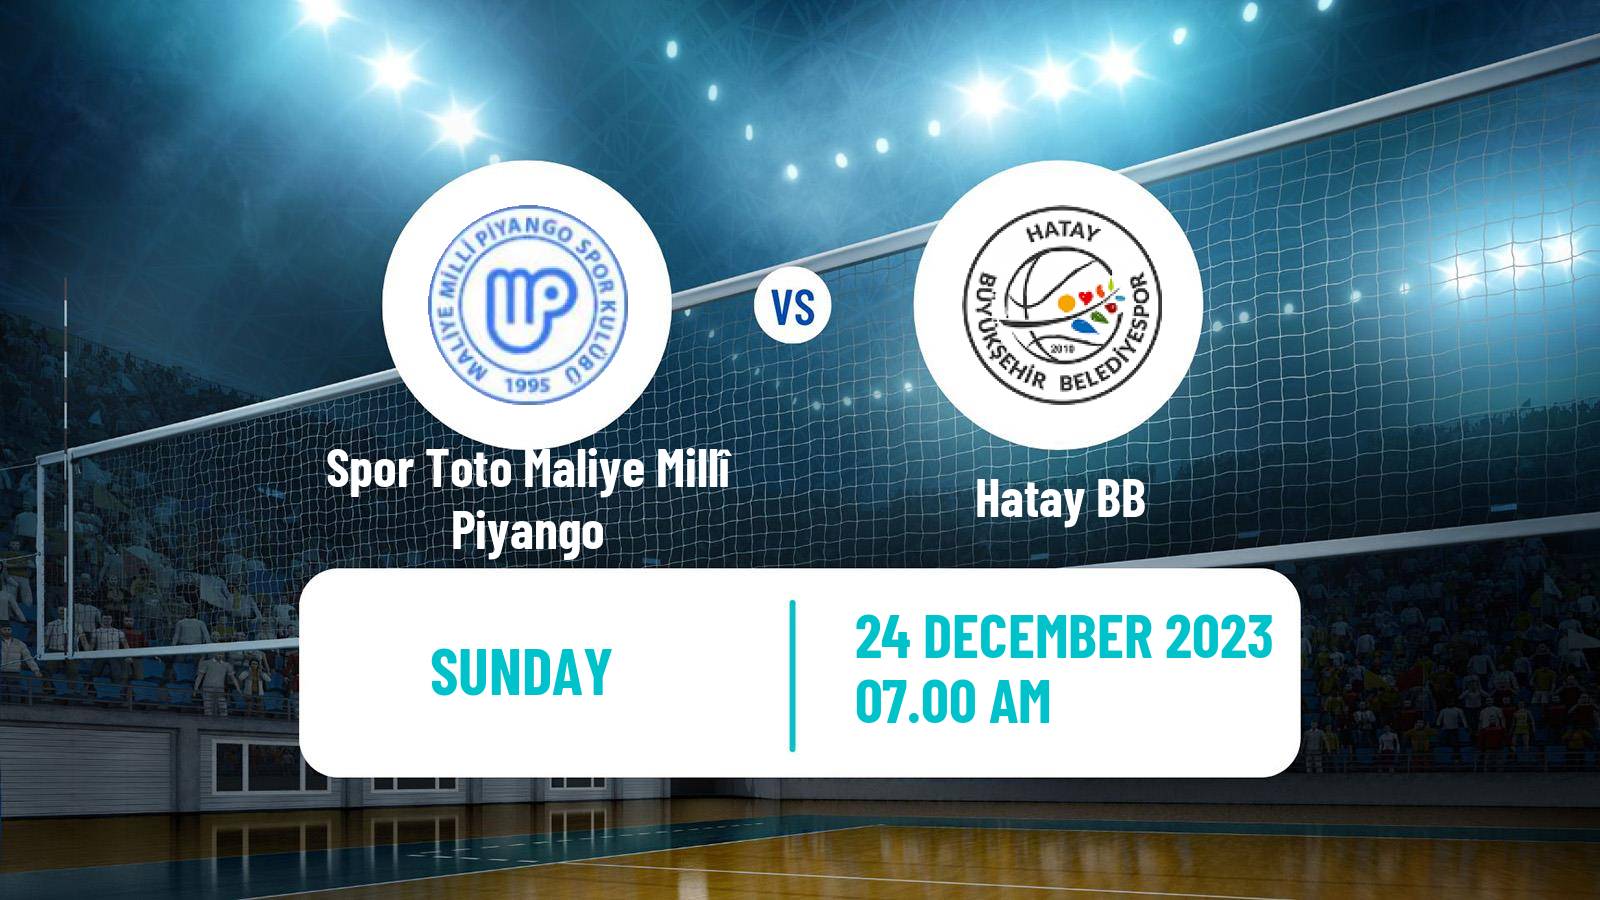 Volleyball Turkish Efeler Ligi Volleyball Spor Toto Maliye Millî Piyango - Hatay BB